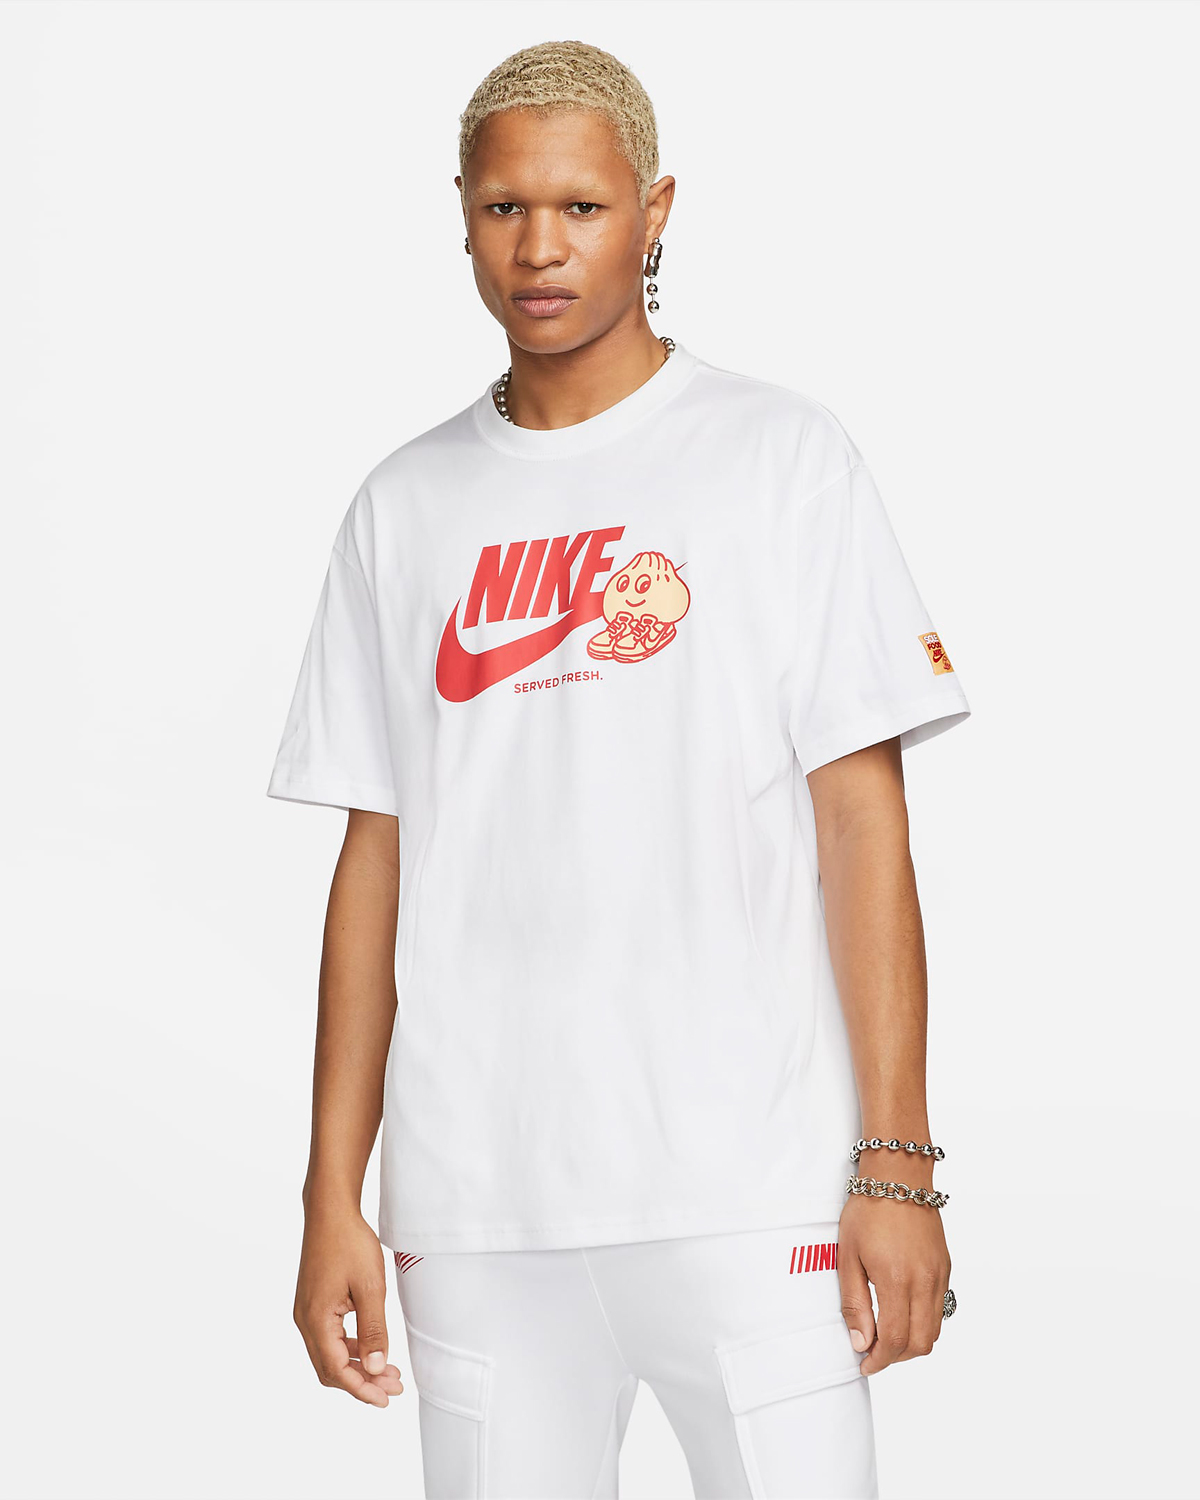 Nike-Sportswear-Sole-Food-T-Shirt-White-Red-1